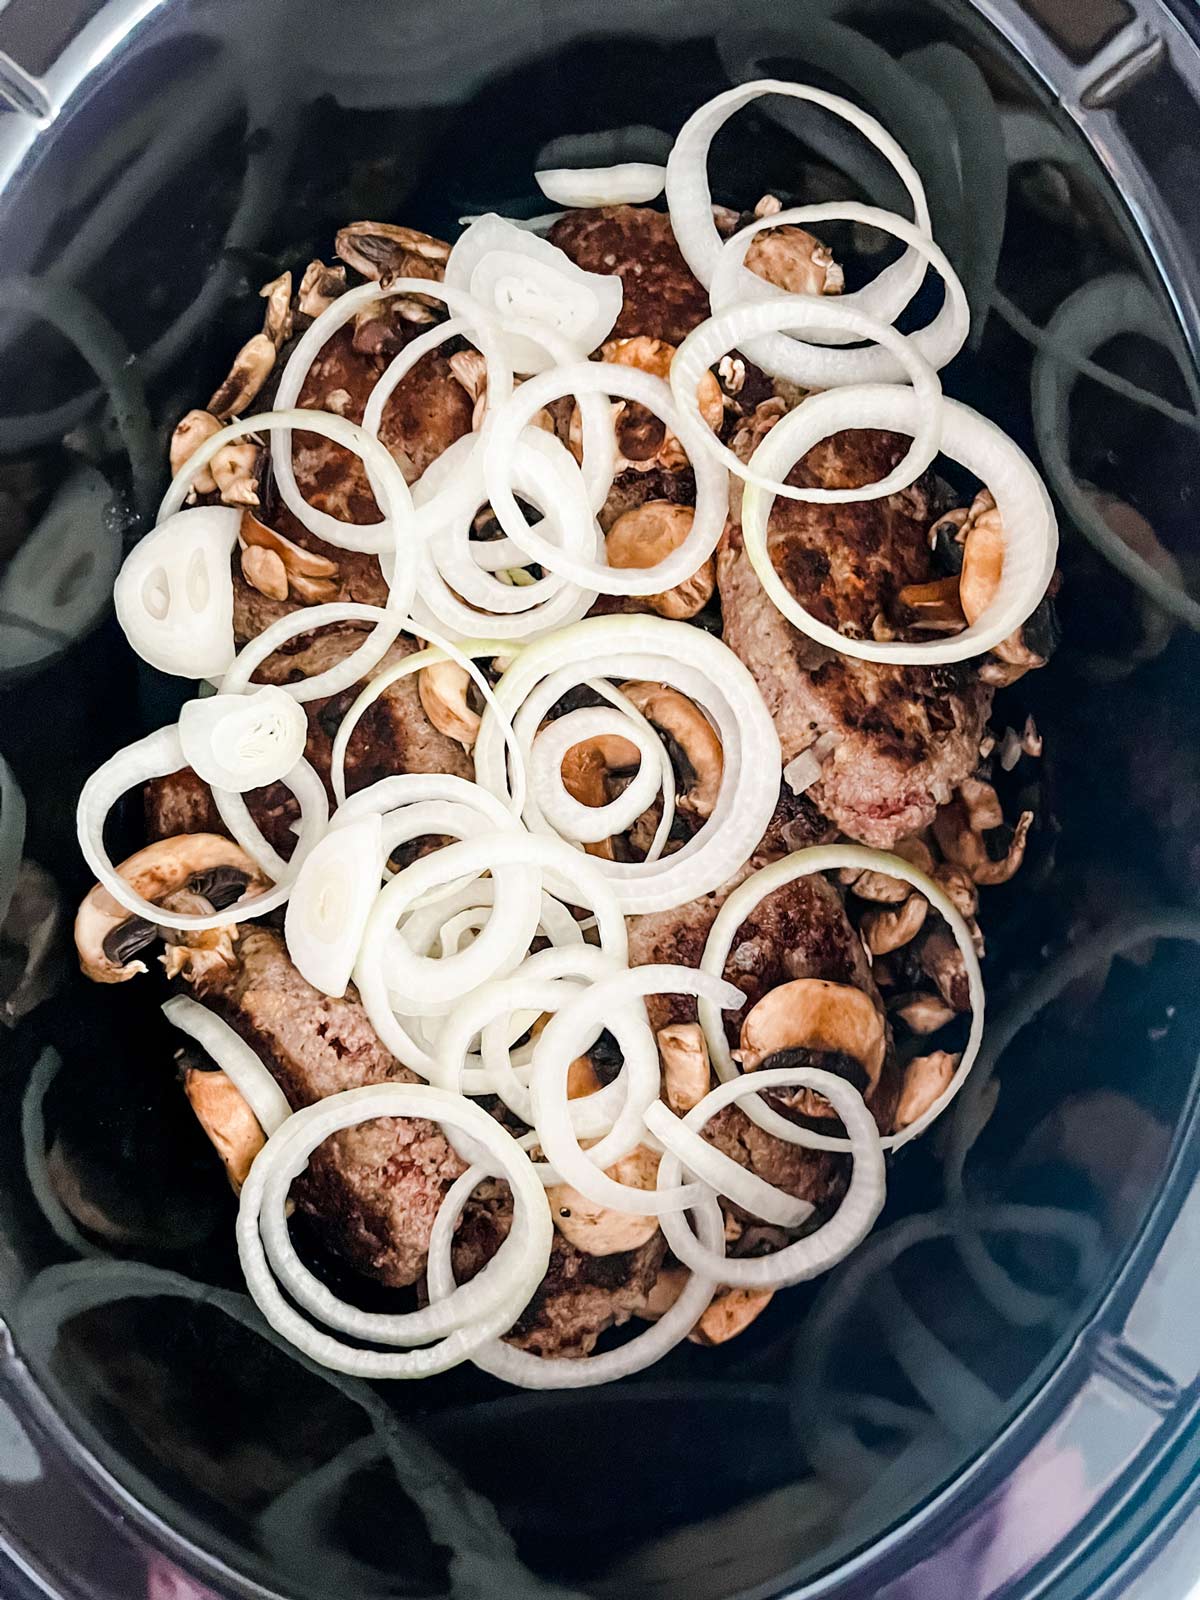 Onions and mushrooms over salisbury steak in a crockpot.